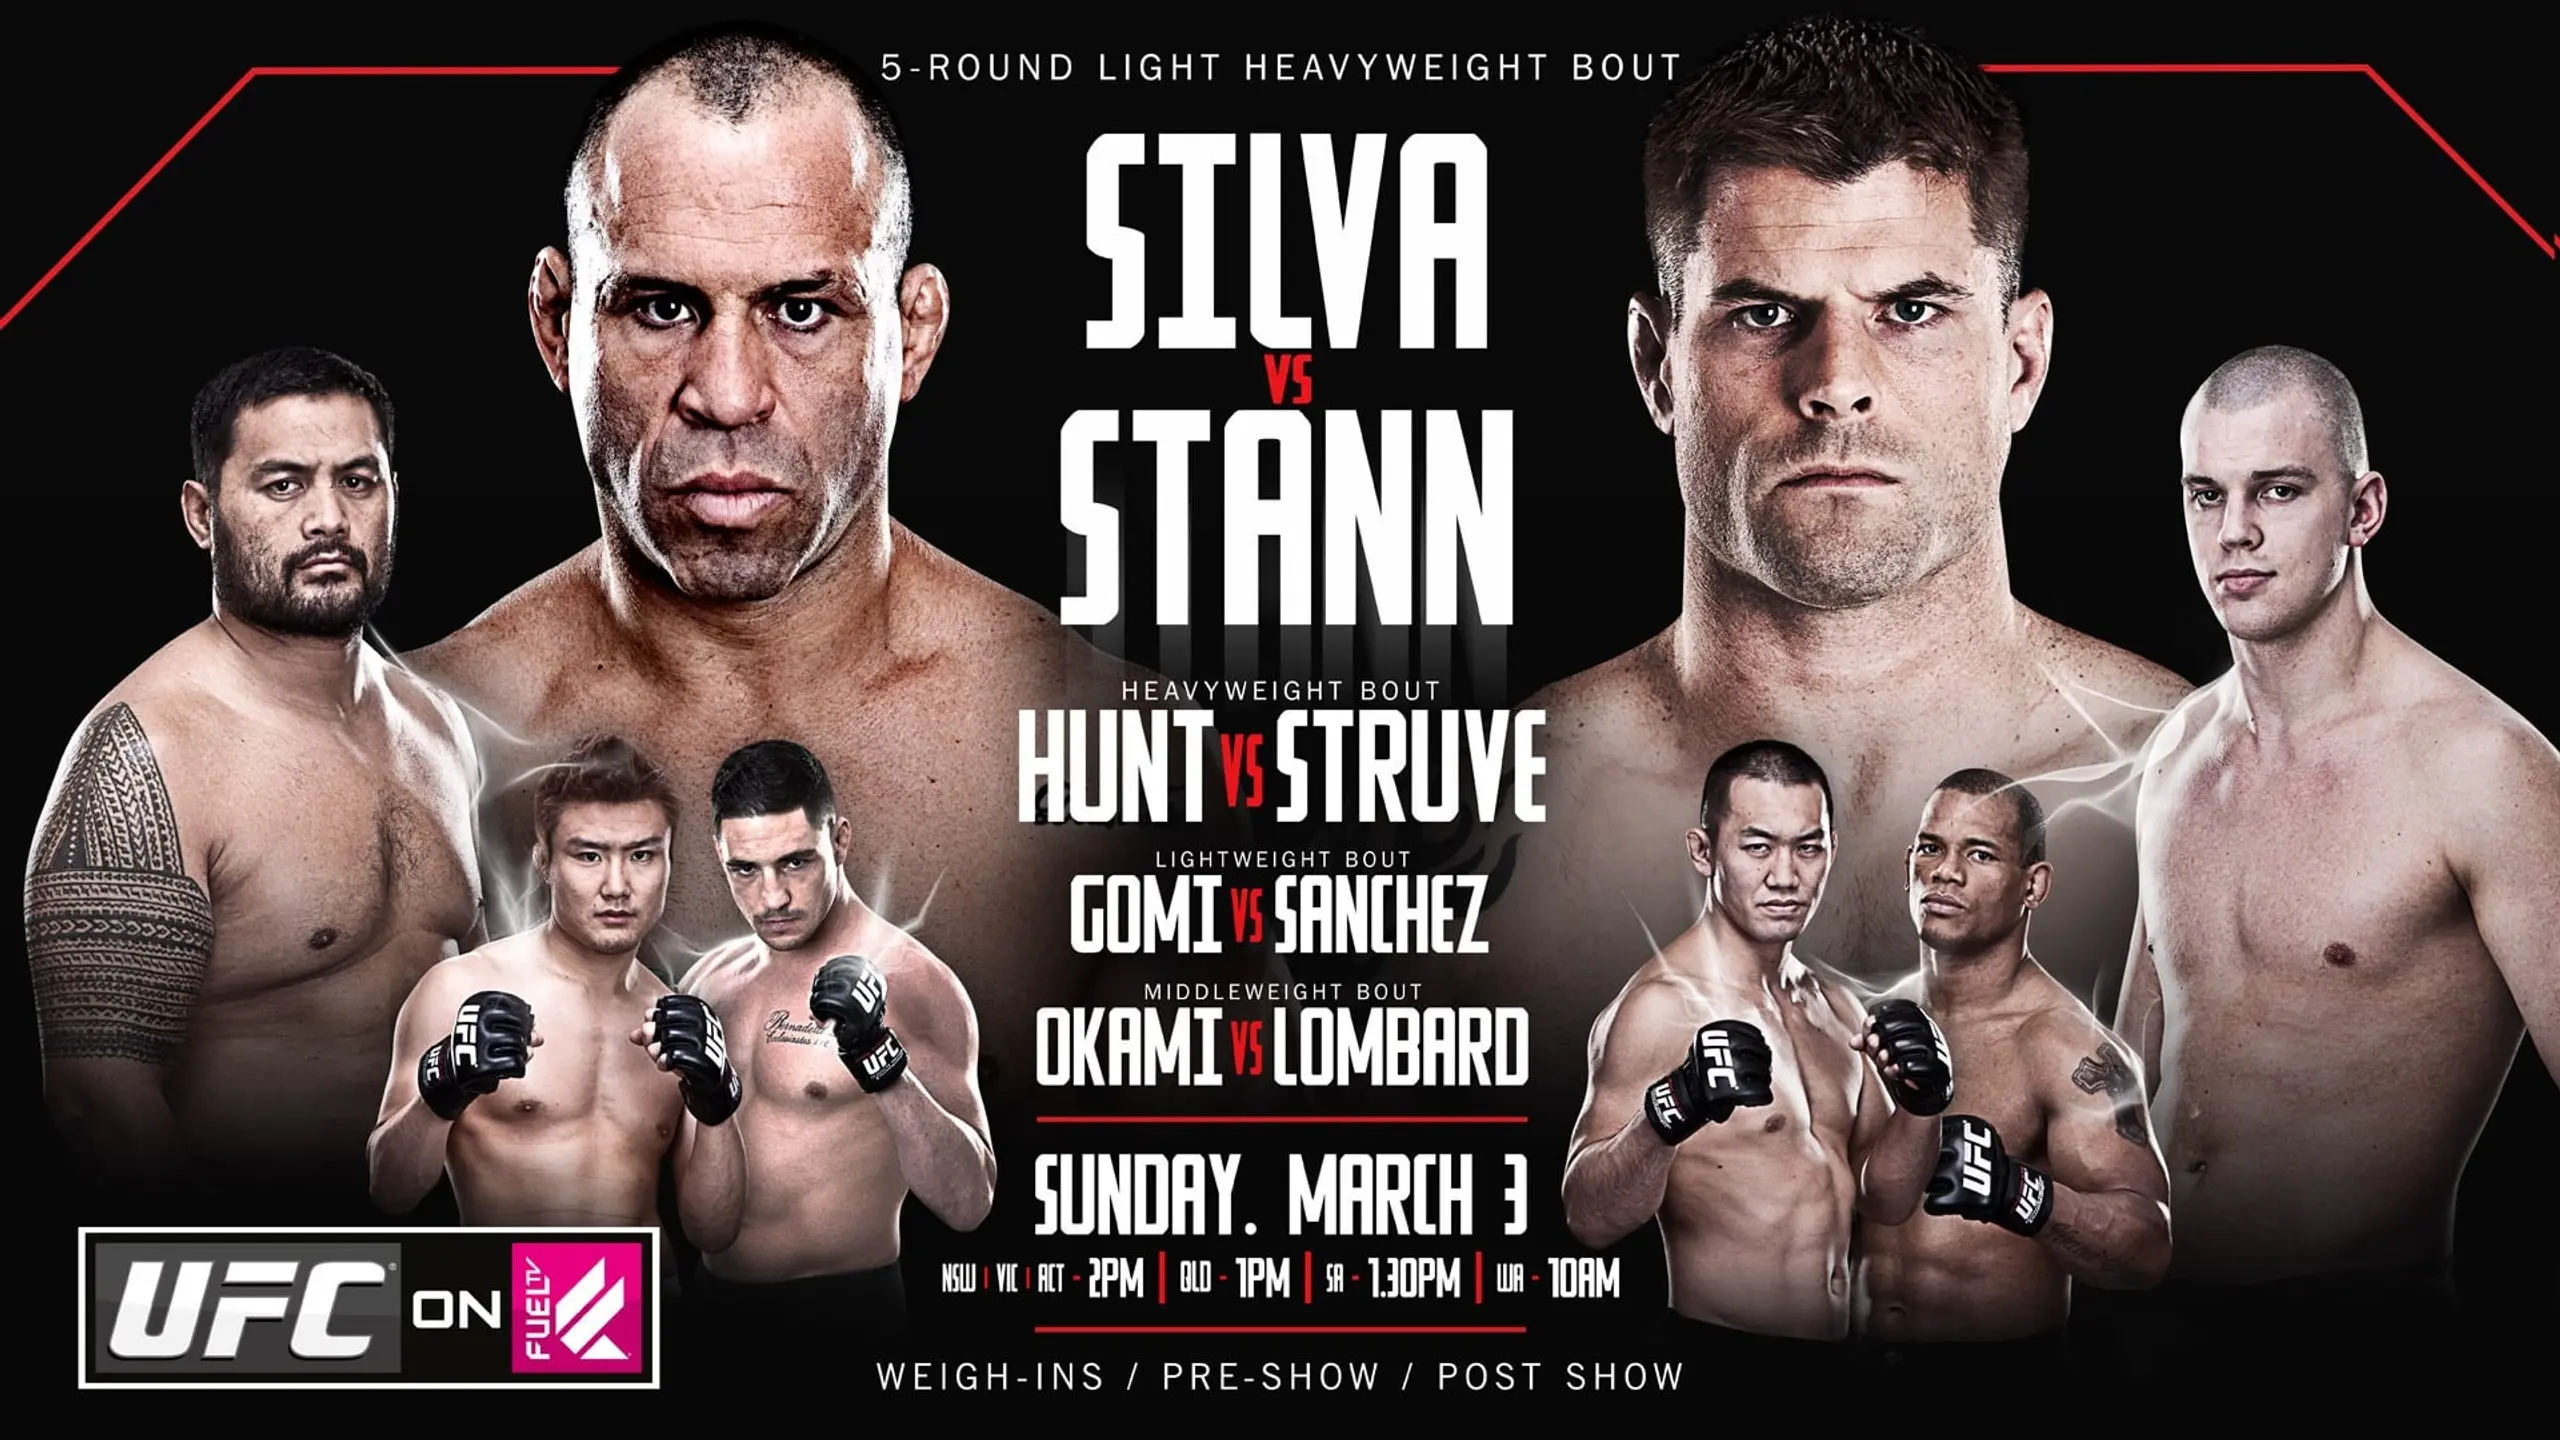 UFC on Fuel TV 8: Silva vs. Stann